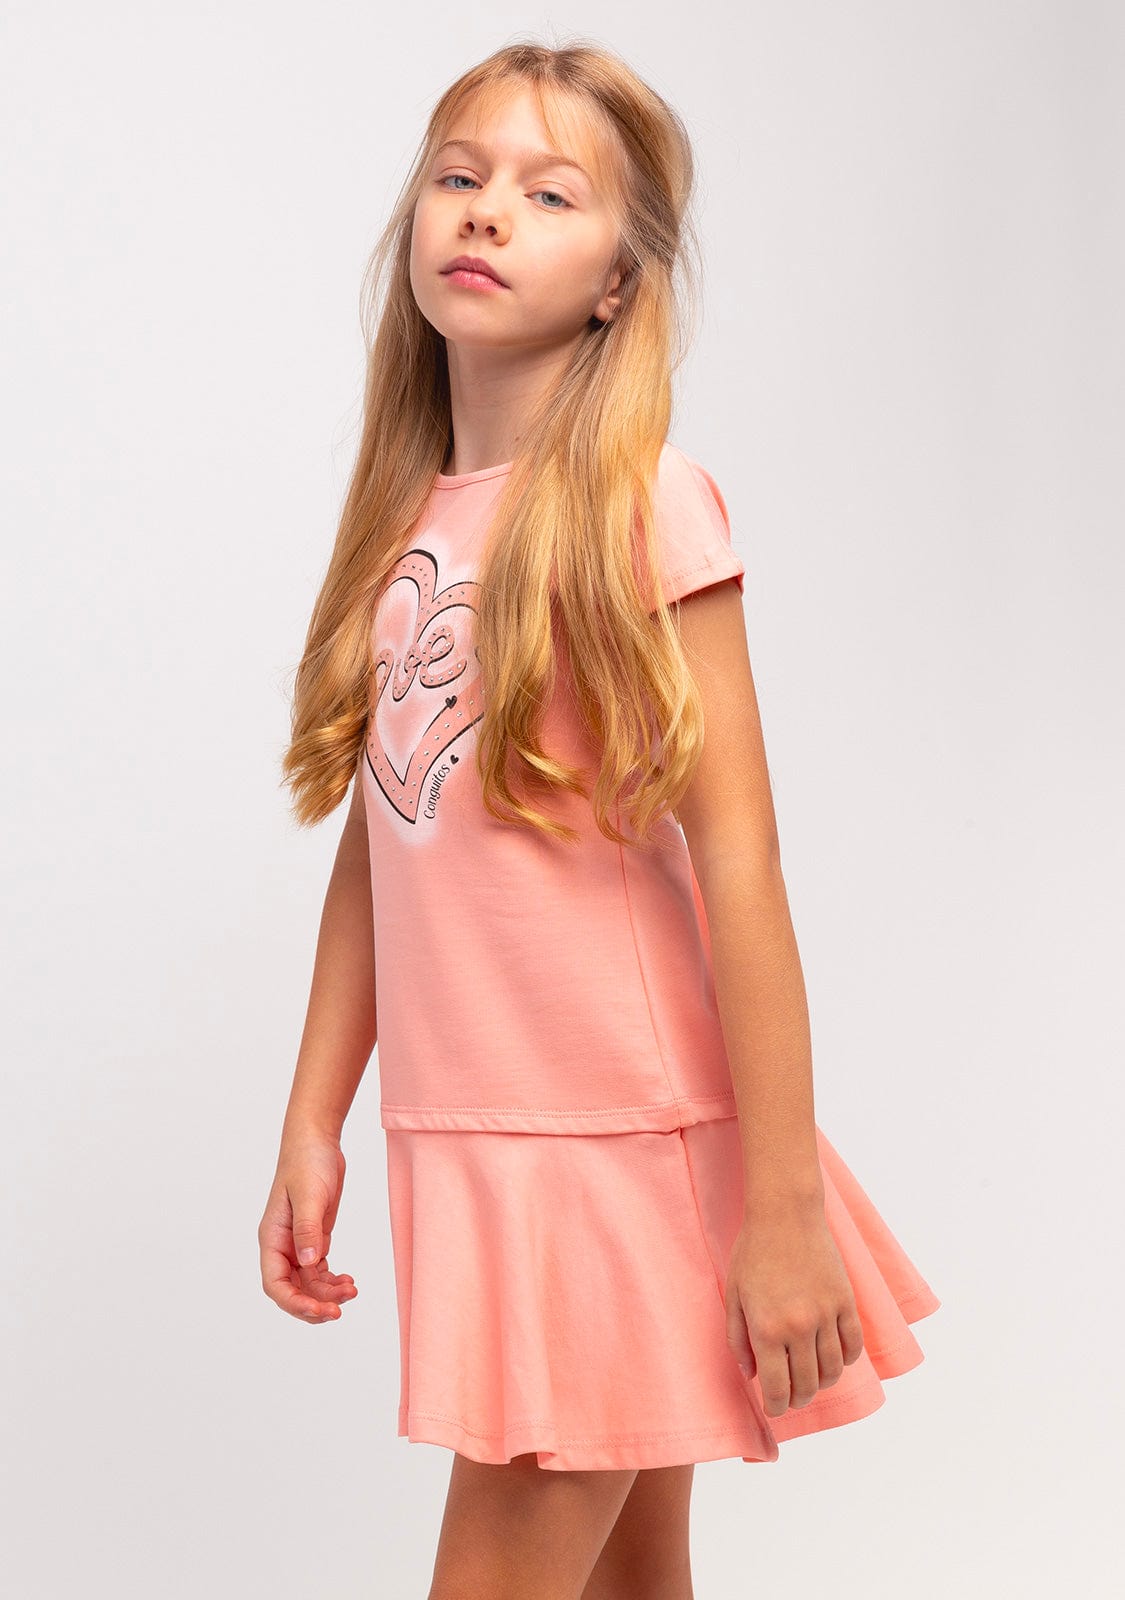 CONGUITOS TEXTIL Clothing Girl's Orange Heart Dress